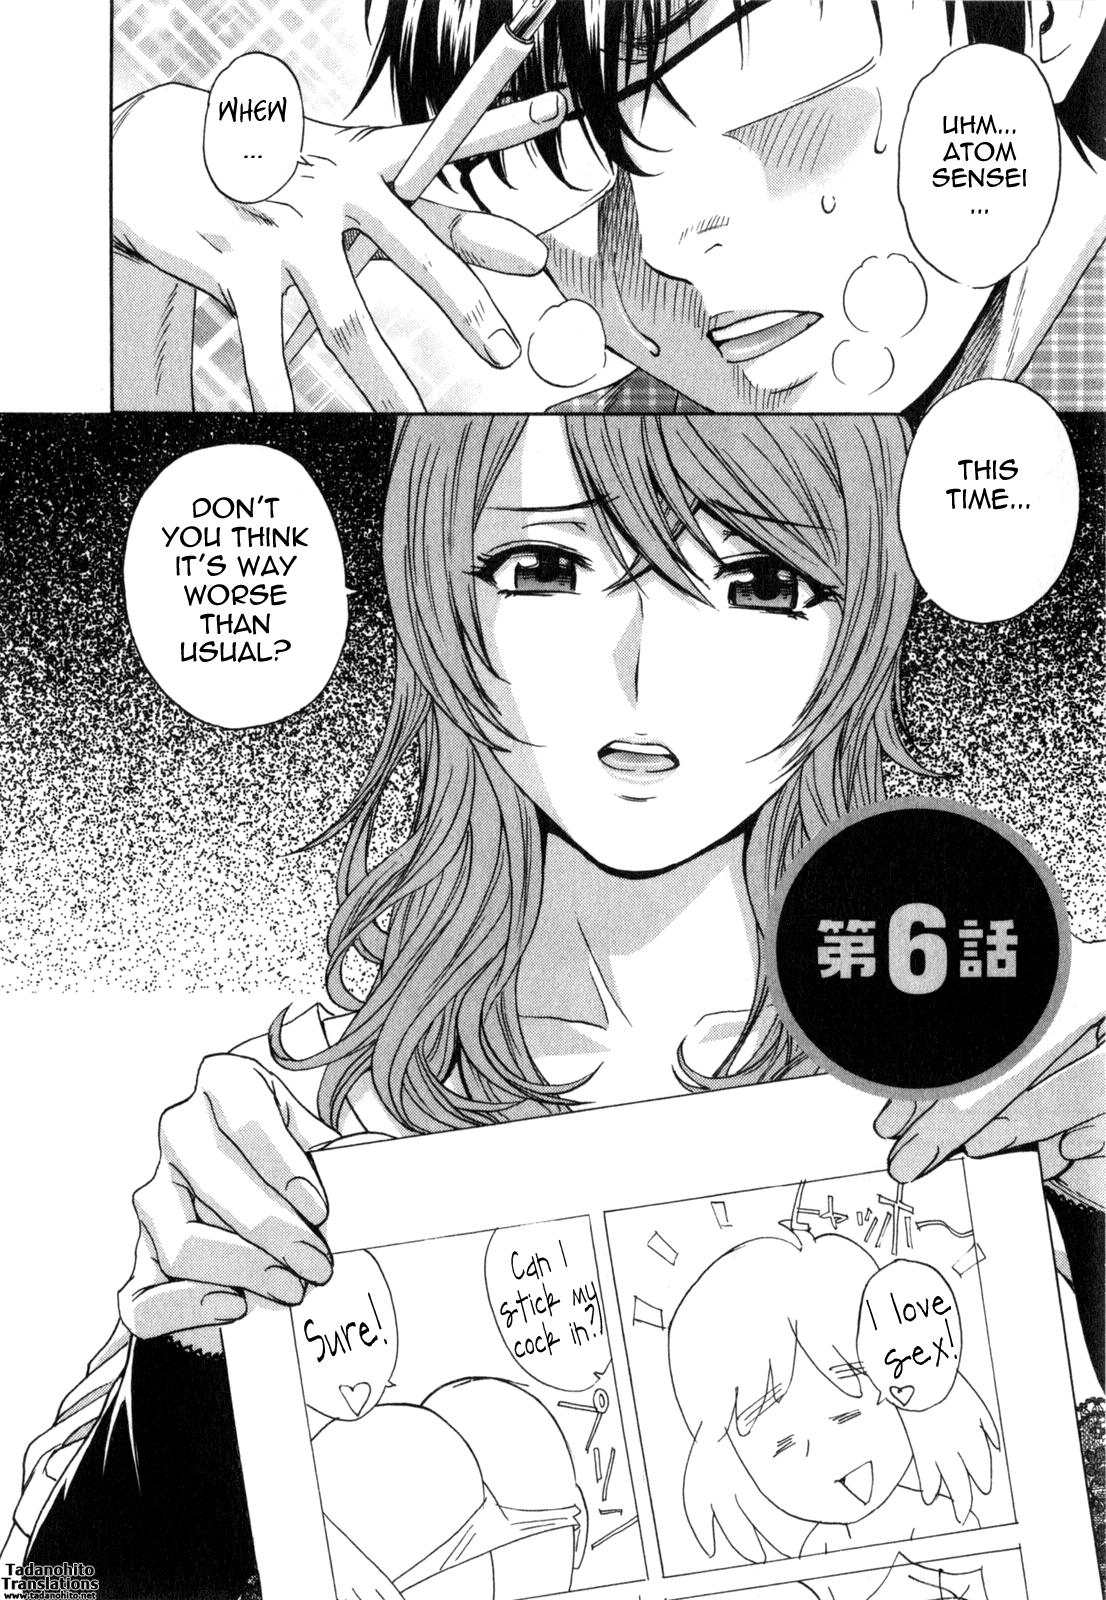 [Hidemaru] Life with Married Women Just Like a Manga 3 - Ch. 1-6 [English] {Tadanohito} 108